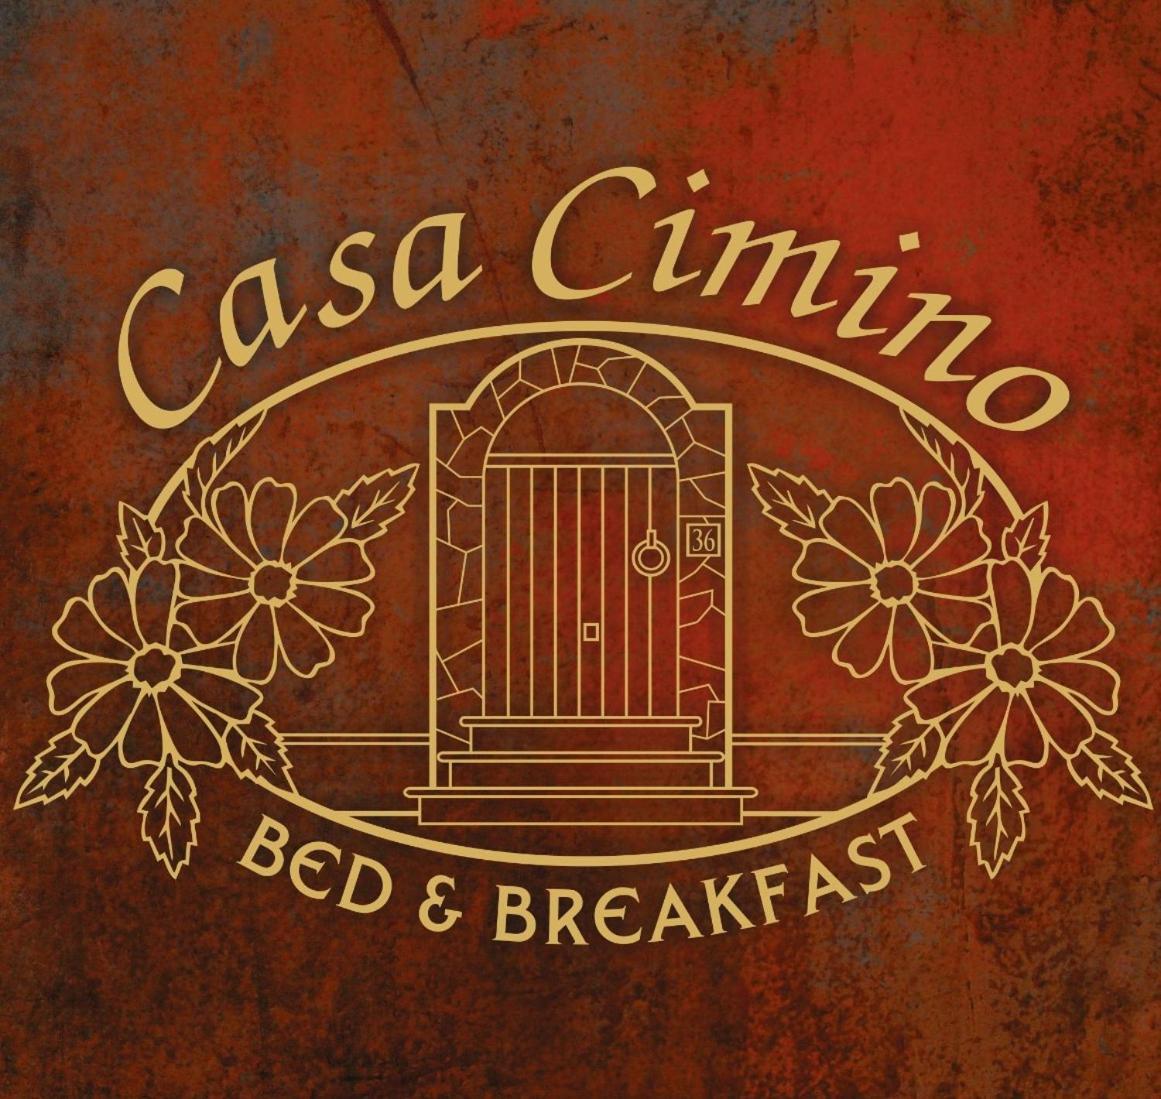 Photo - B&B Casa Cimino - Monopoli - Puglia